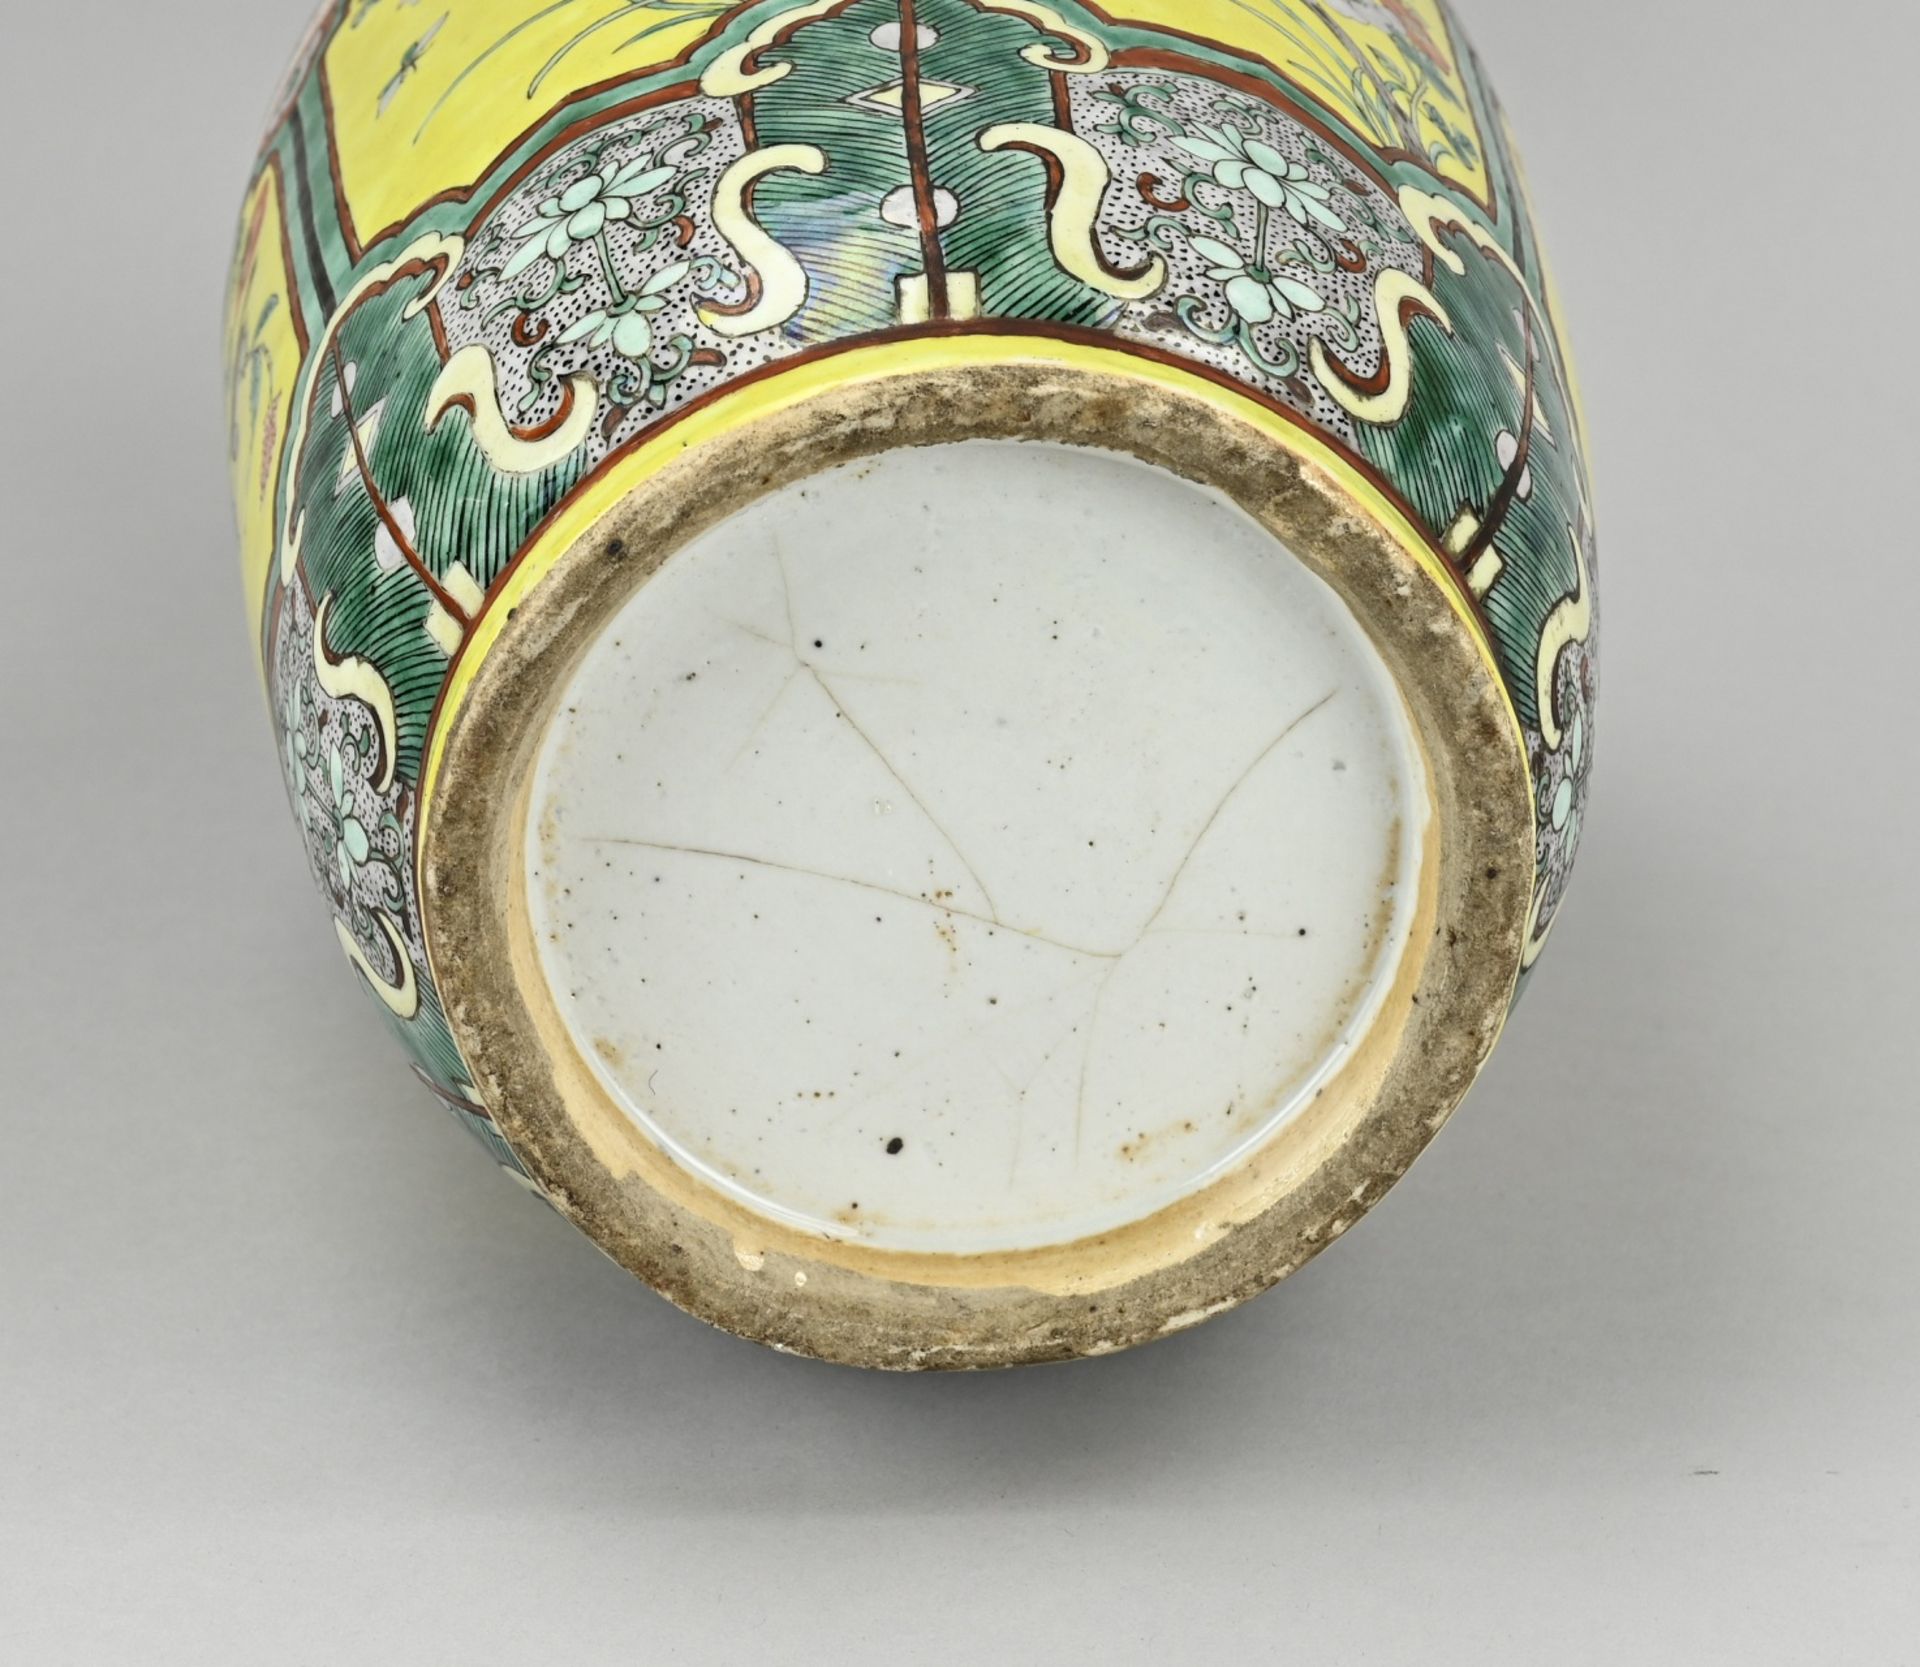 Chinese family jaune vase, H 36 cm. - Image 2 of 2